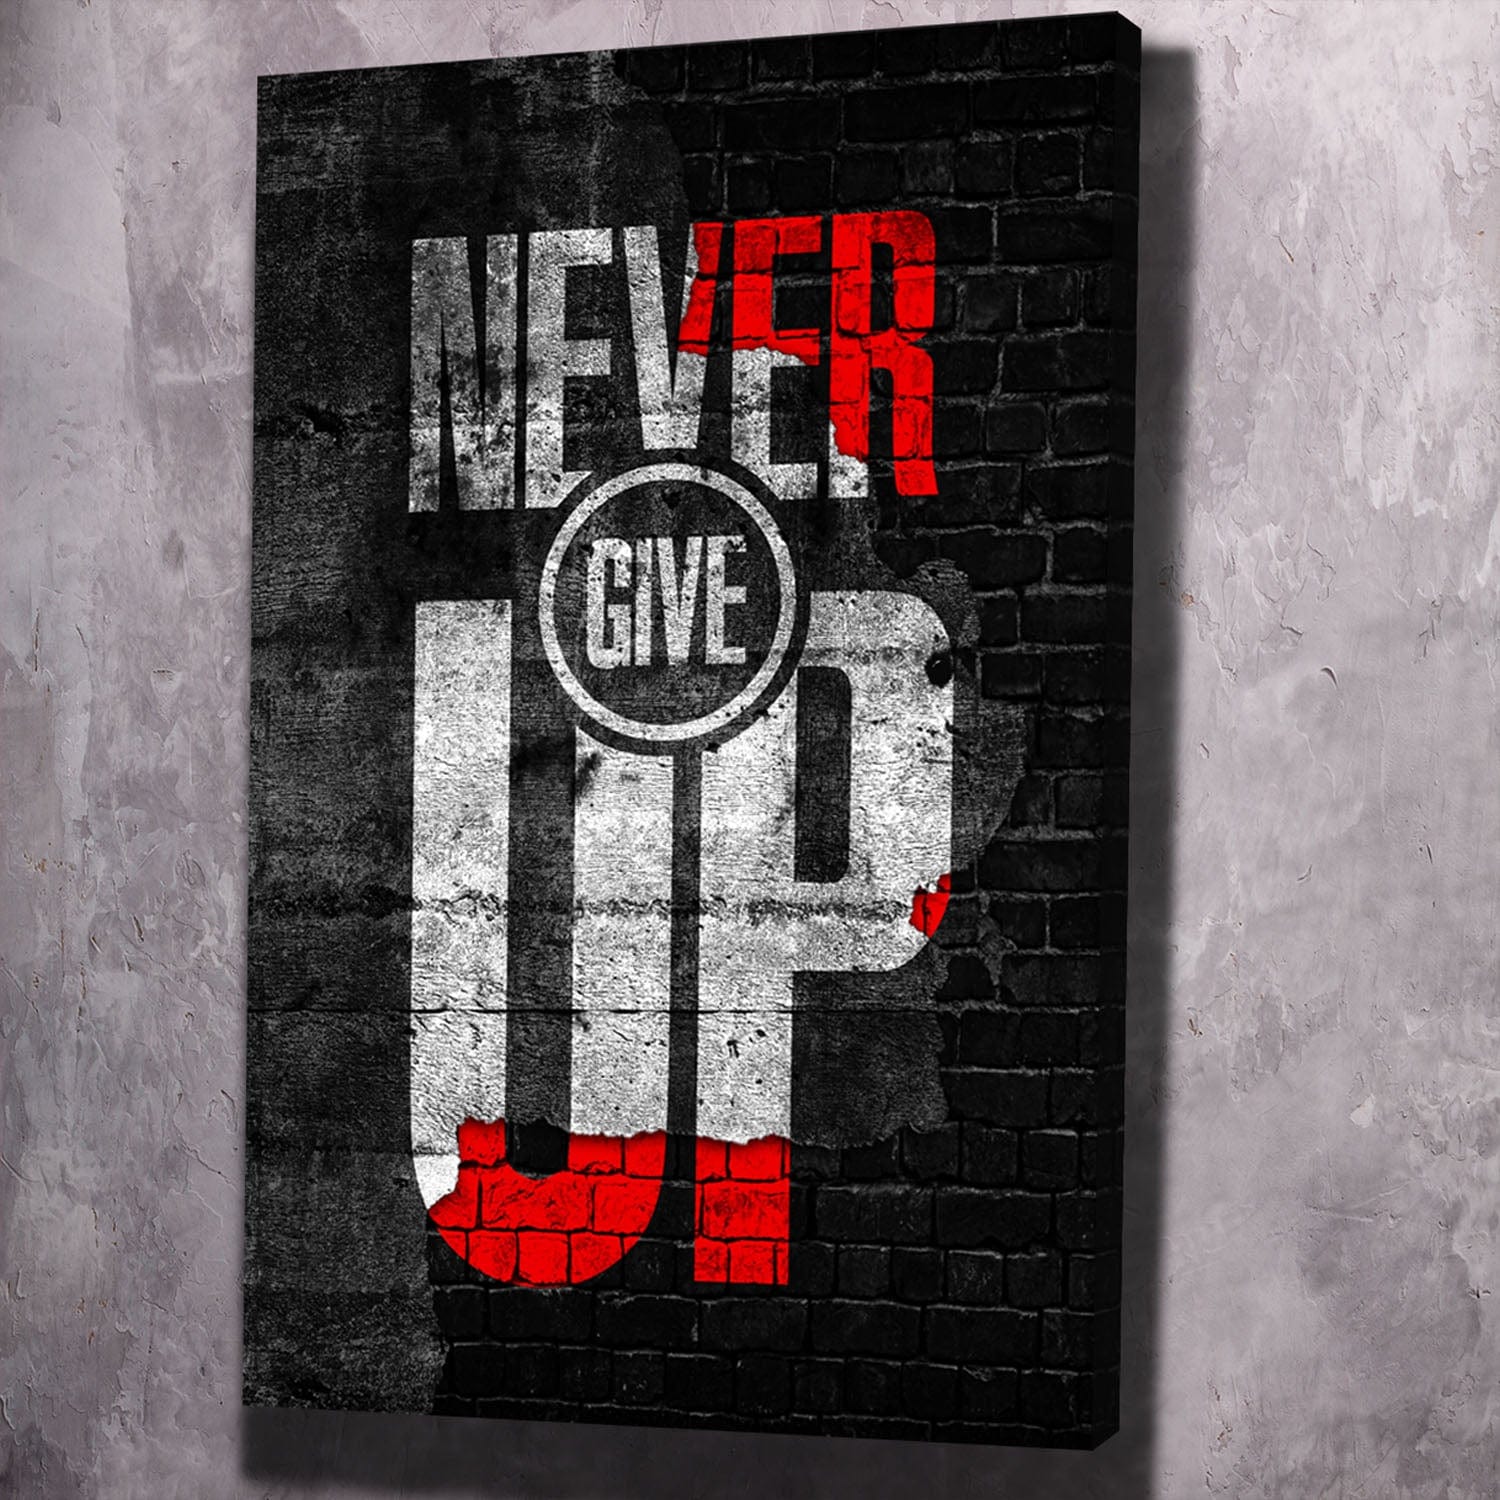 Never Give Up Wall Art | Inspirational Wall Art Motivational Wall Art Quotes Office Art | ImpaktMaker Exclusive Canvas Art Portrait